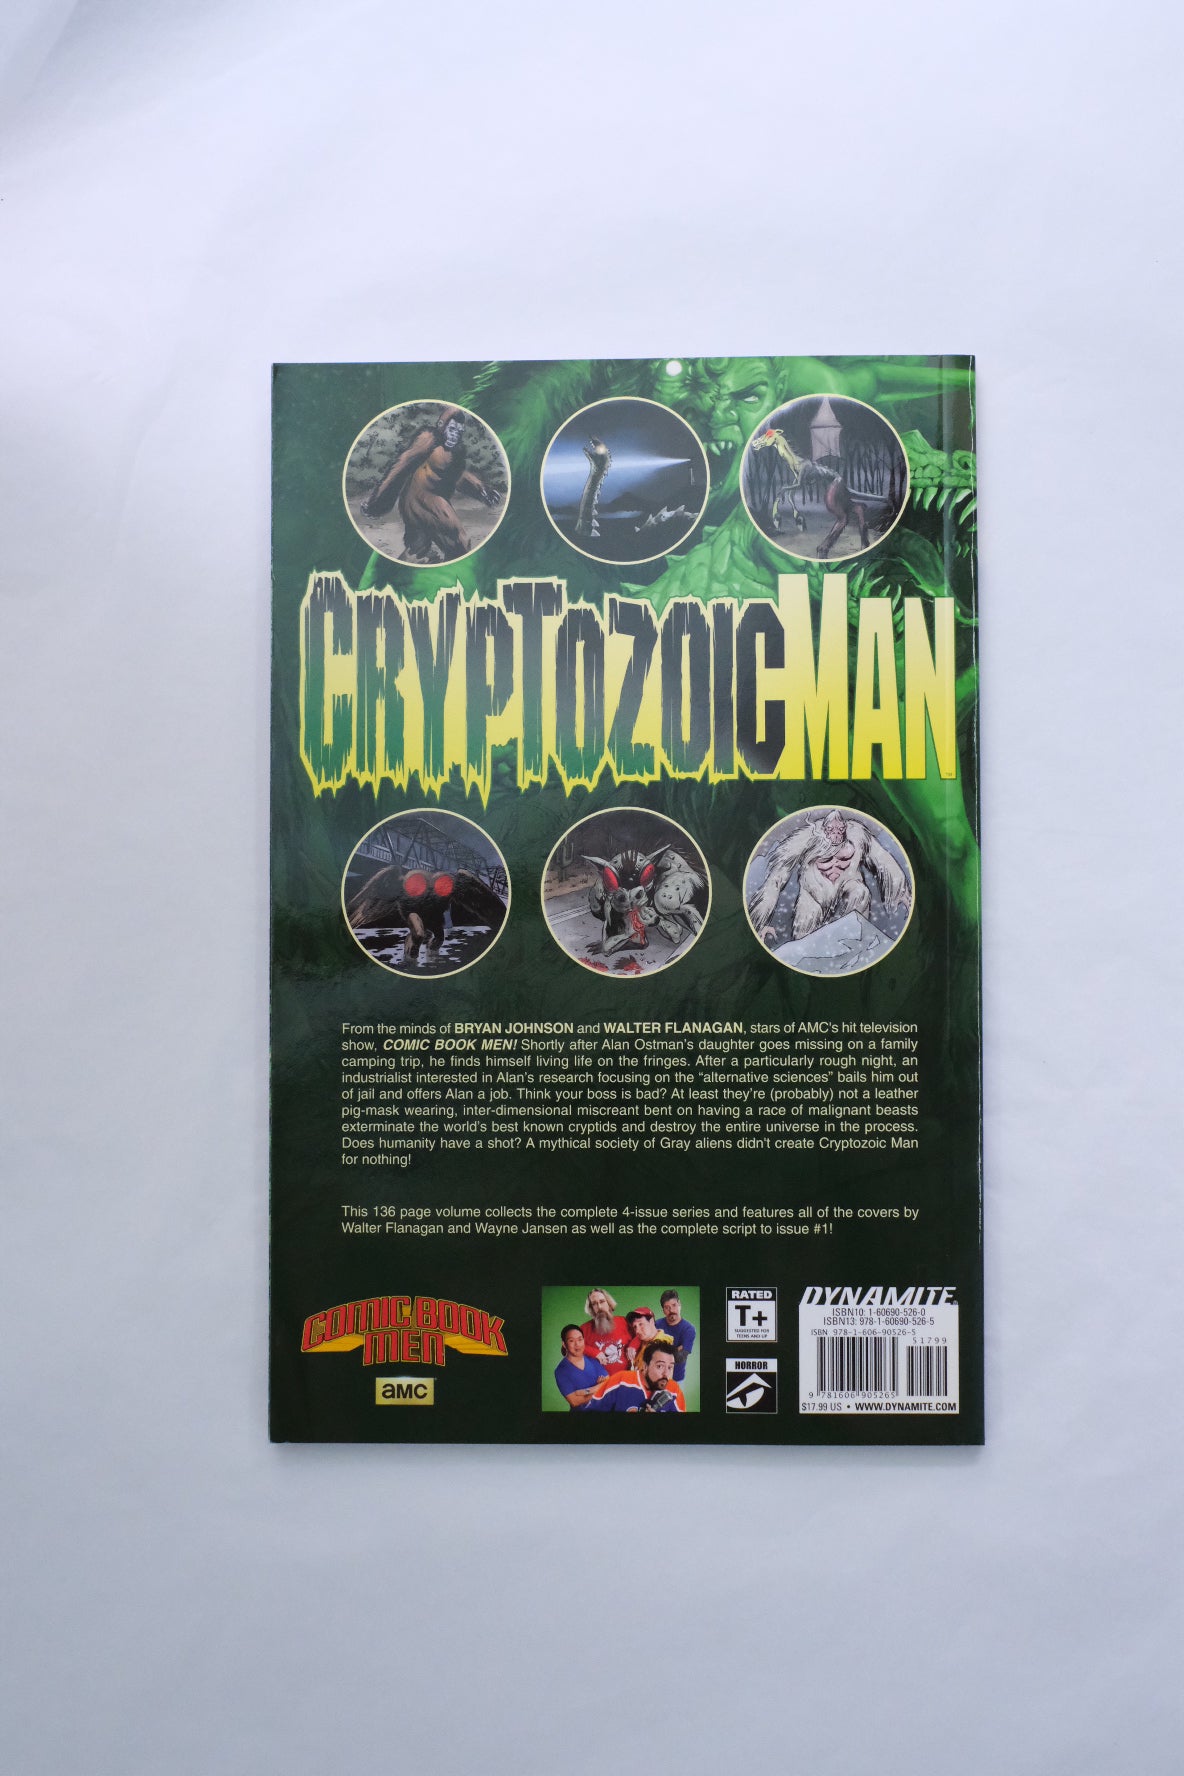 Cryptozoic Man Volume 1